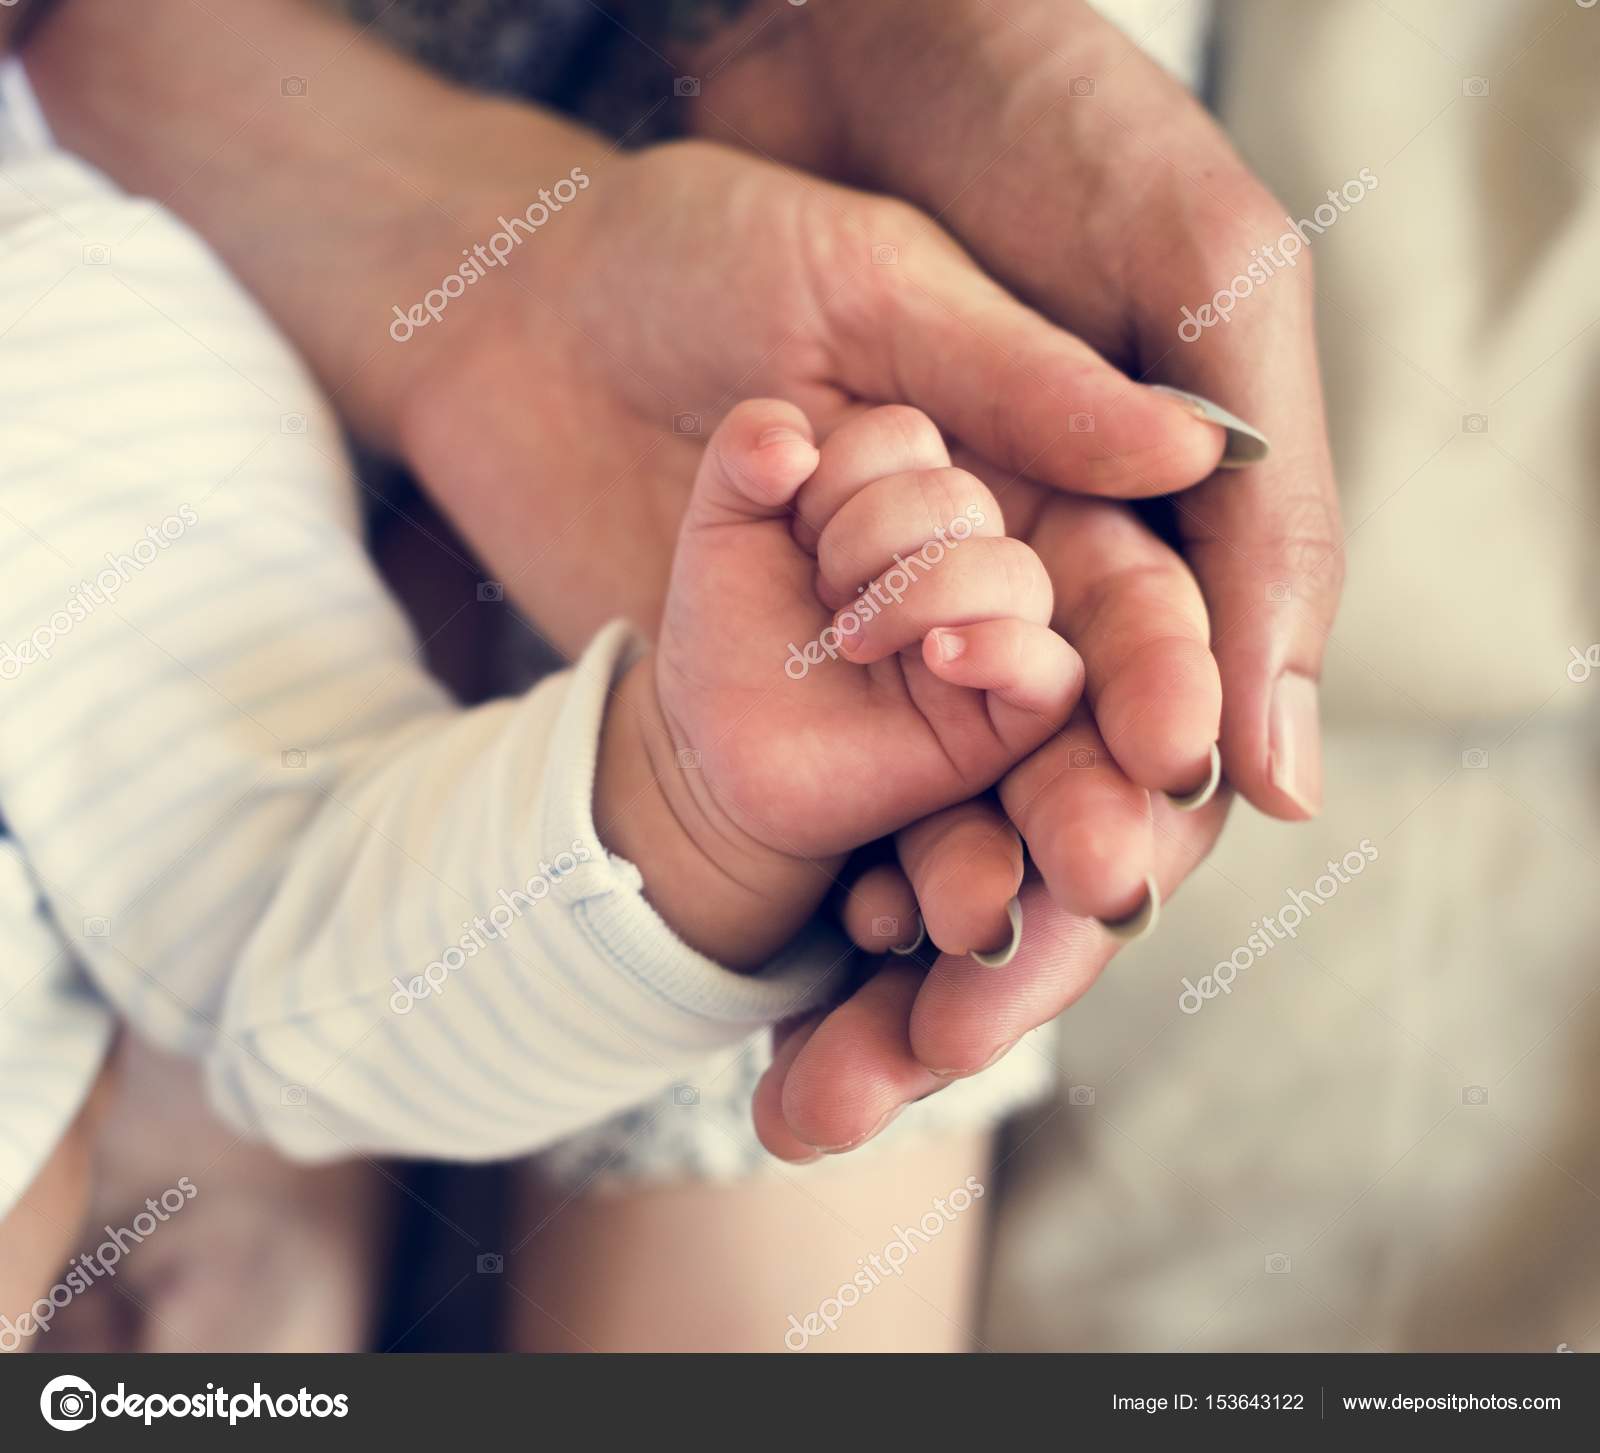 https://st3.depositphotos.com/3591429/15364/i/1600/depositphotos_153643122-stock-photo-parents-holding-hand-of-newborn.jpg